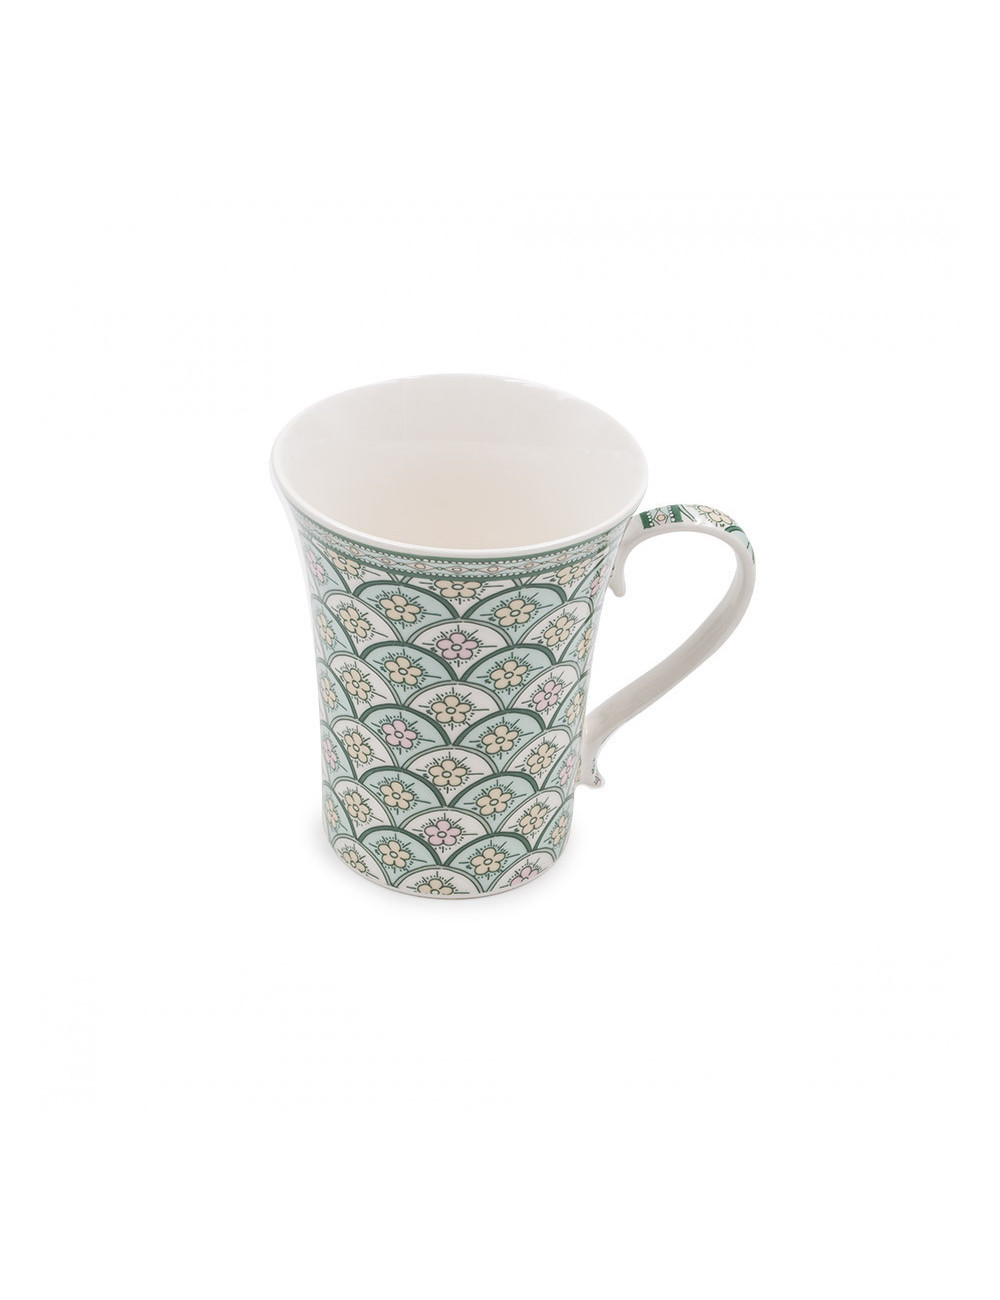 Elegante mug Season in porcellana decorata verde acqua - La Pianta del Tè shop on line